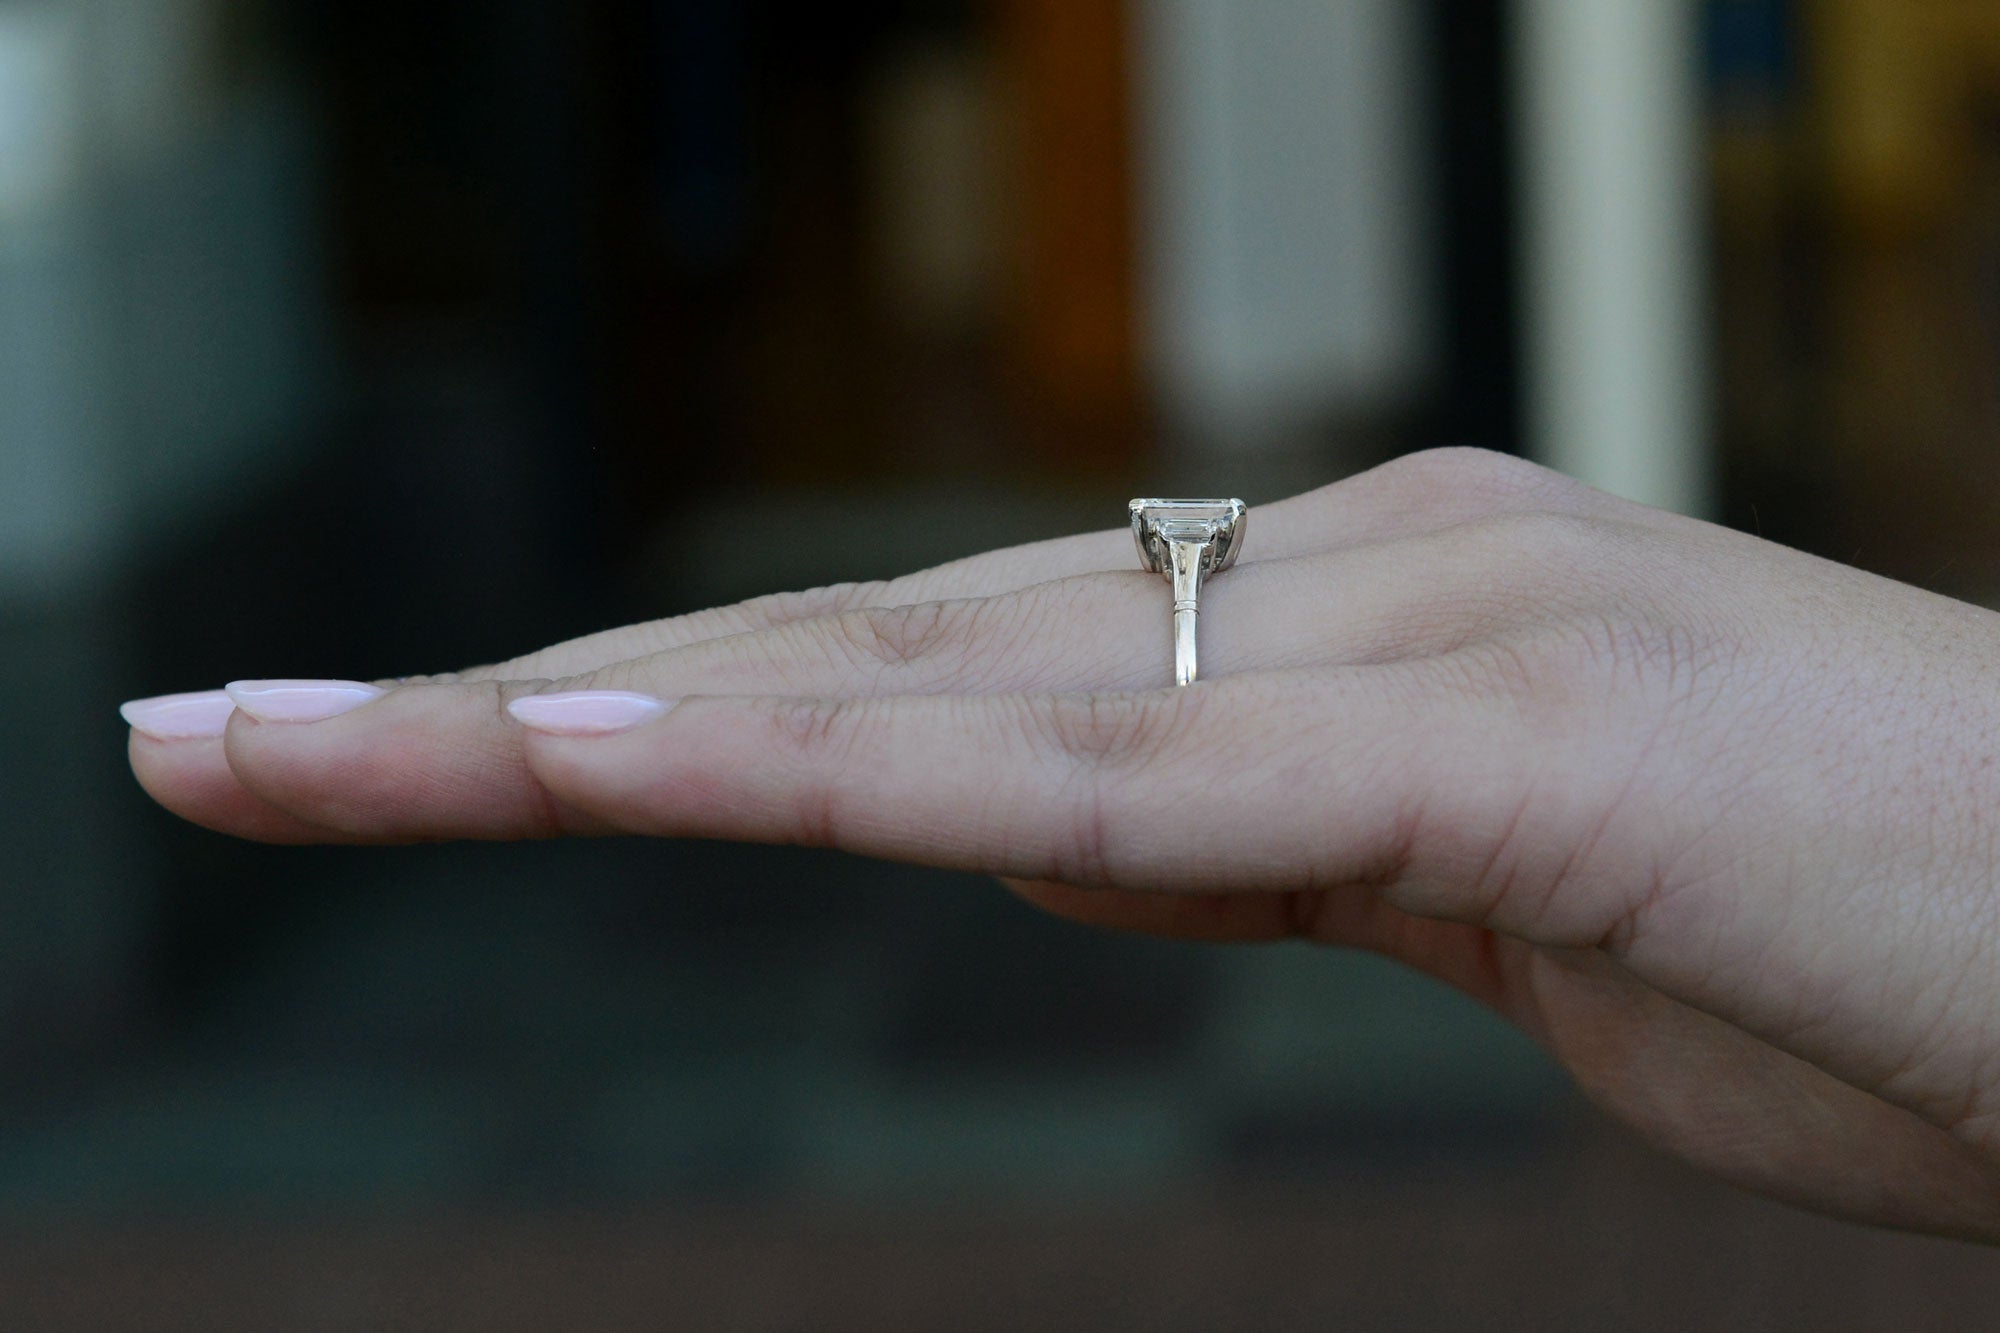 Vintage 2 Carat Emerald Cut Diamond Engagement Ring